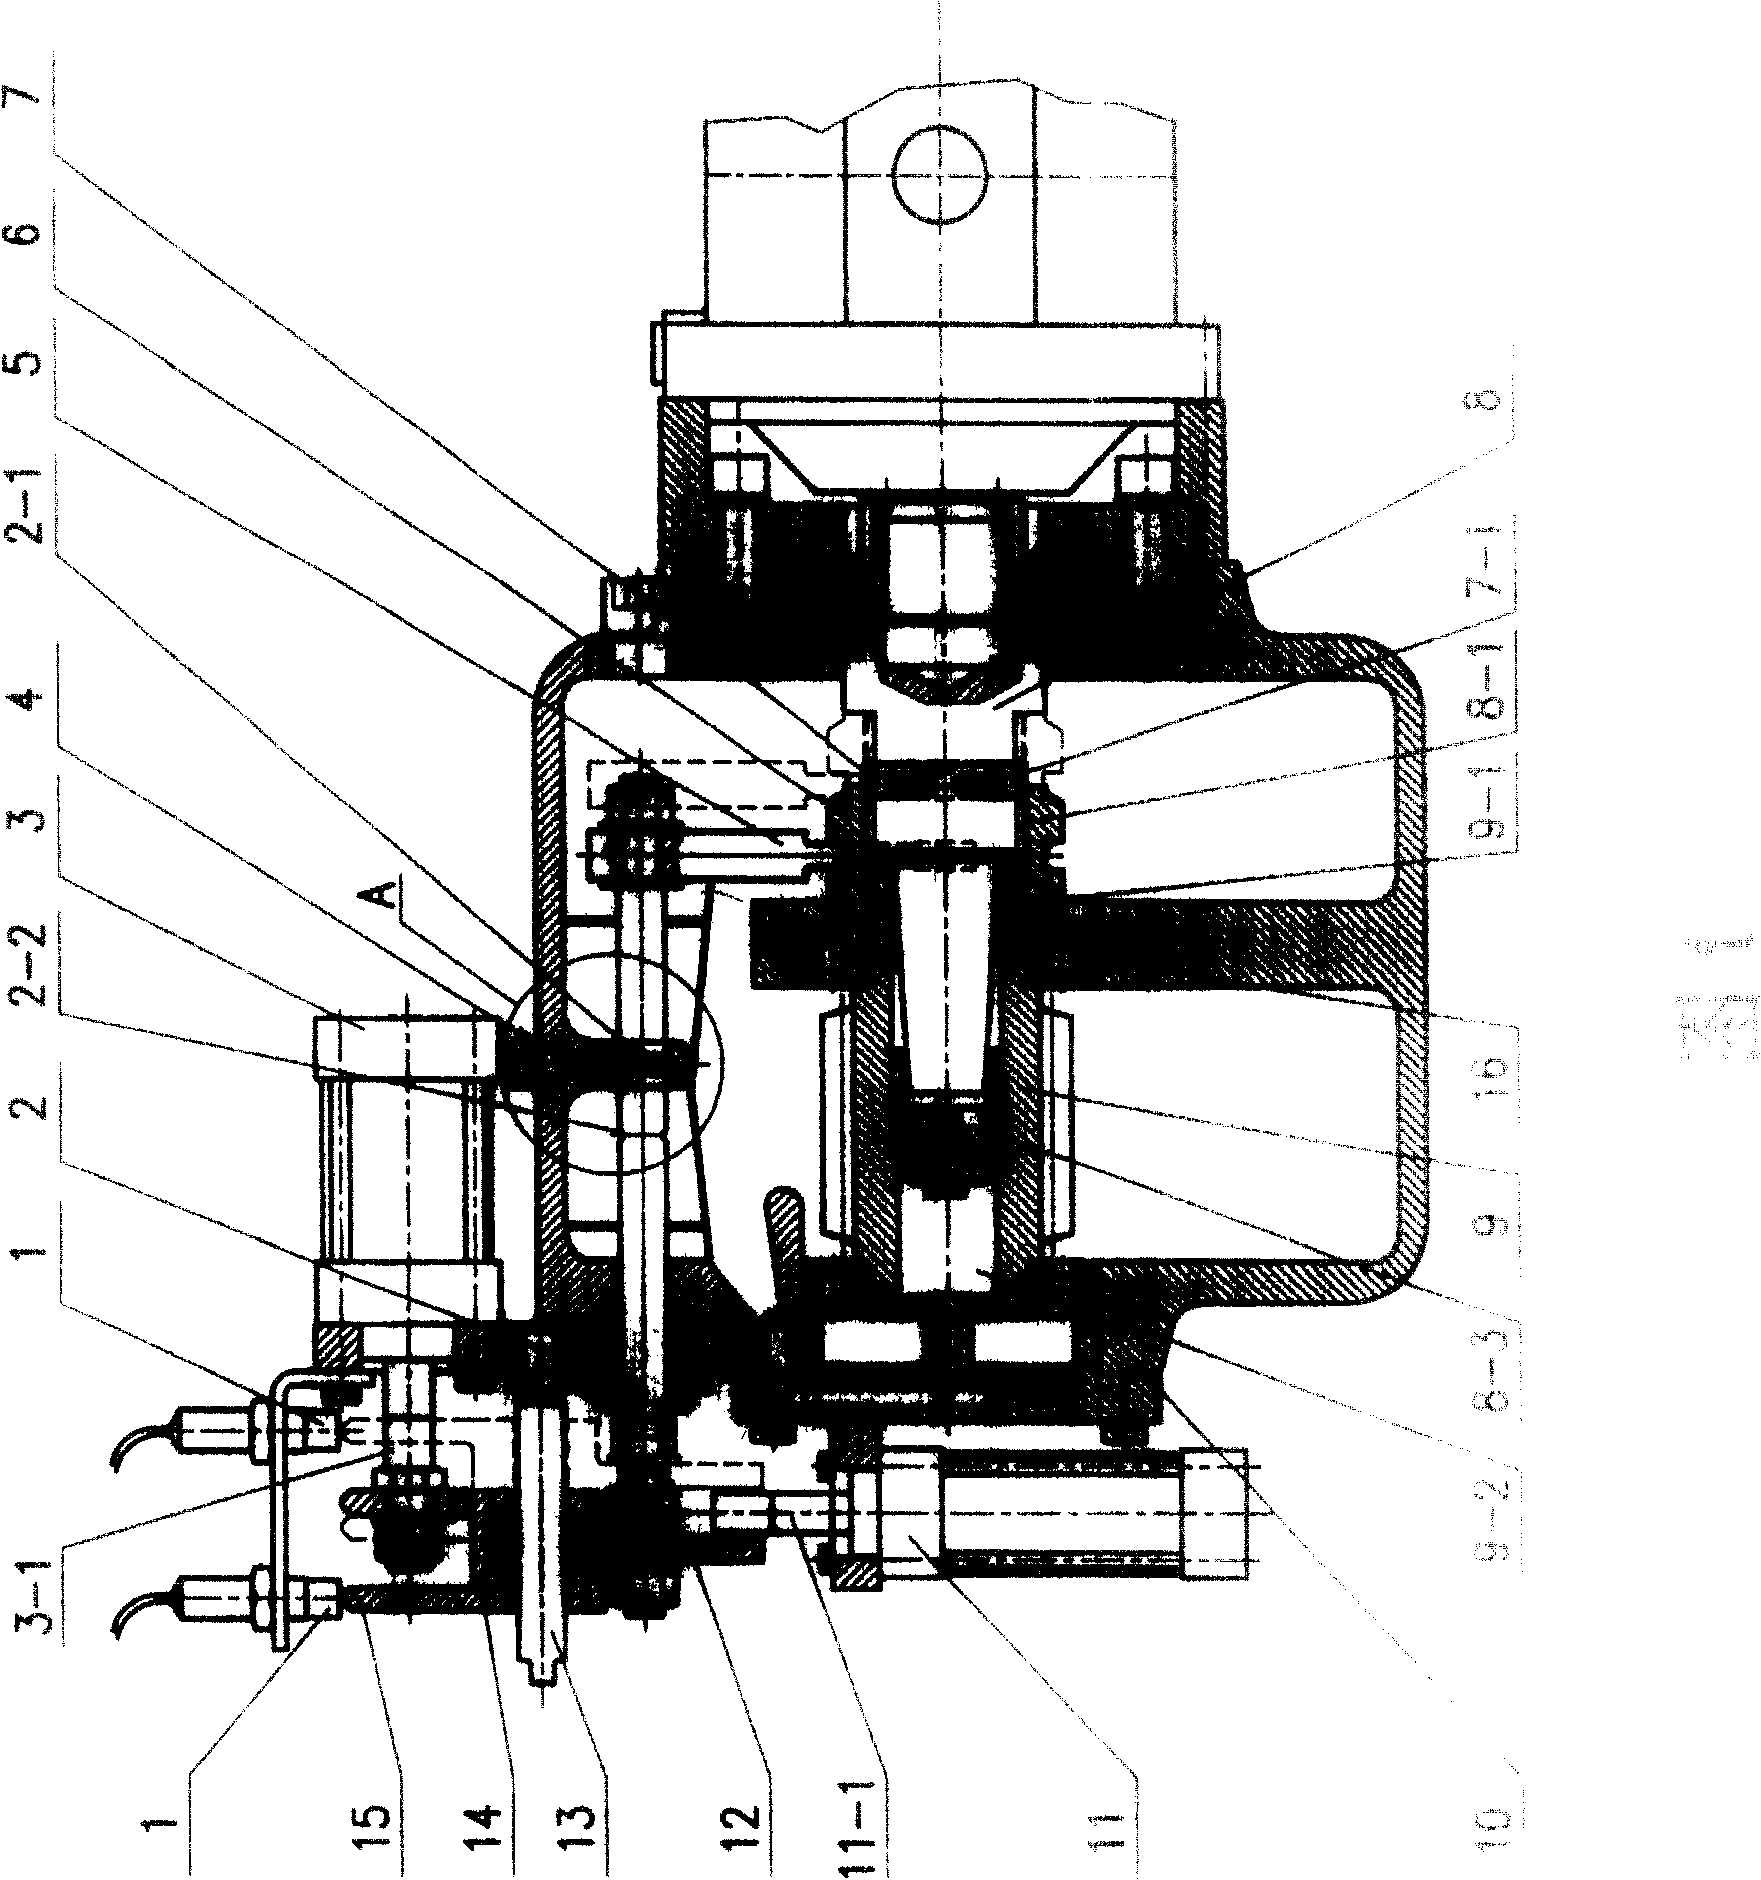 Axle gear box shifting retaining mechanism